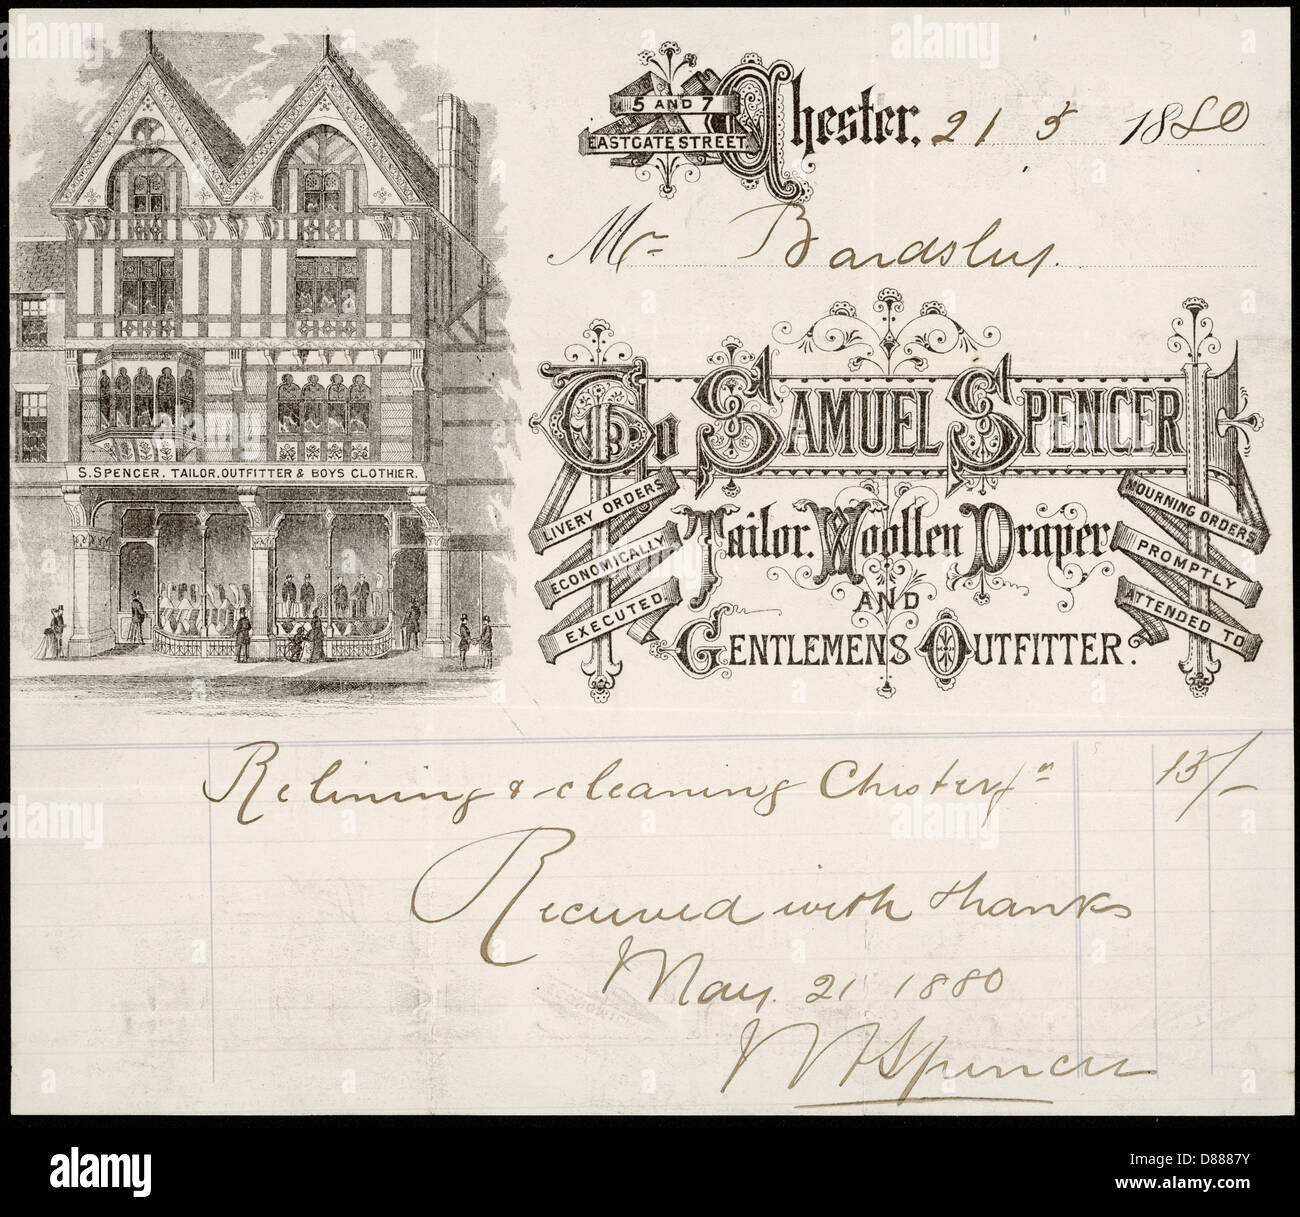 SAMUEL SPENCER BILL 1880 Stock Photo